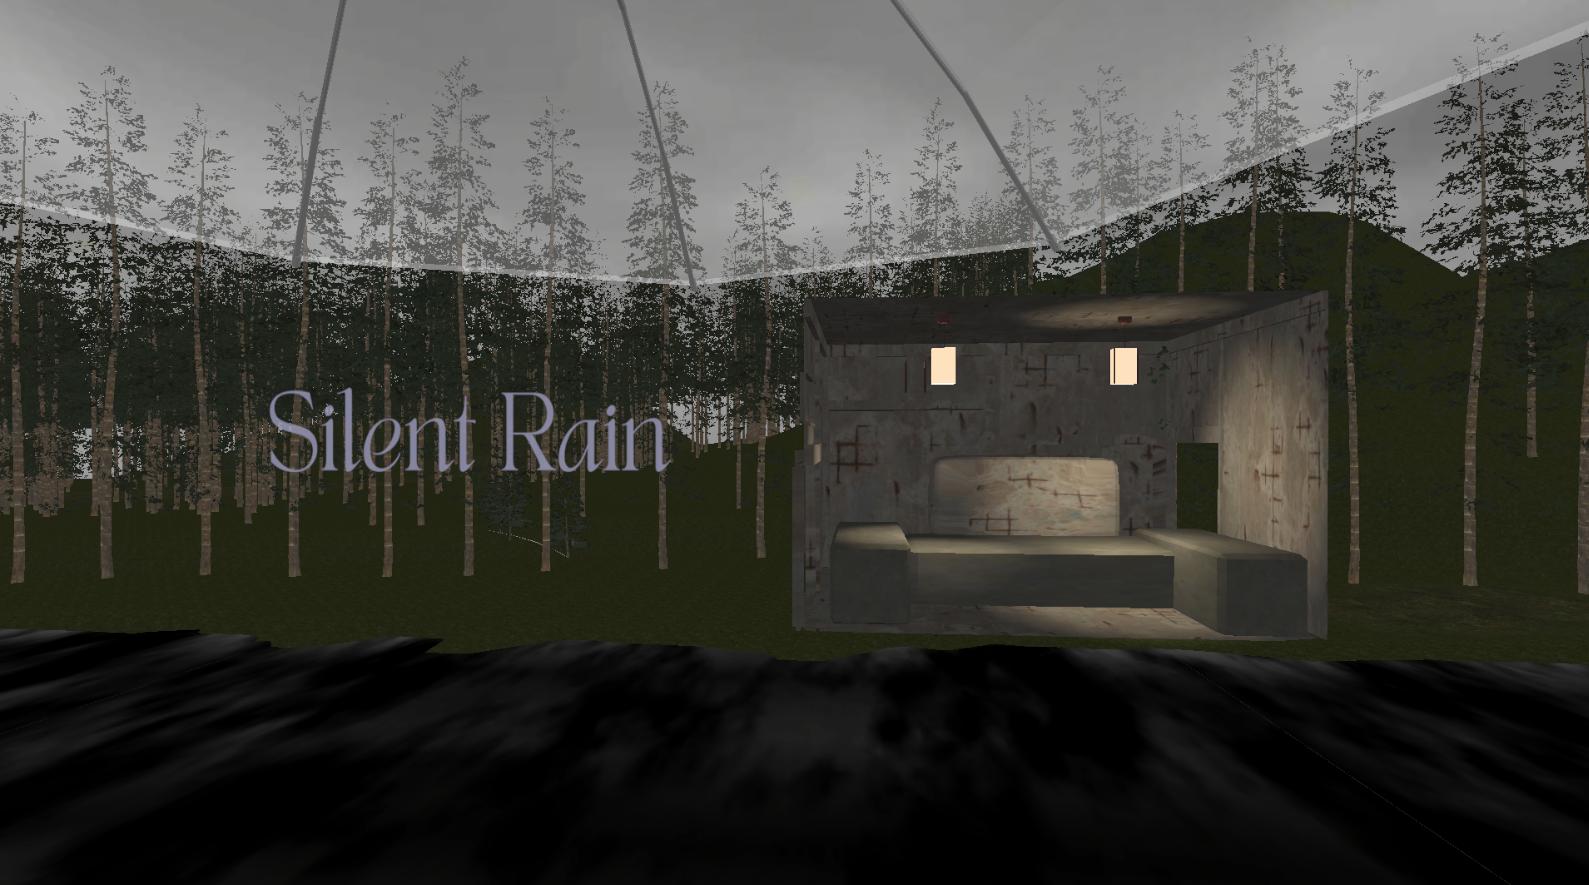 Silent rain